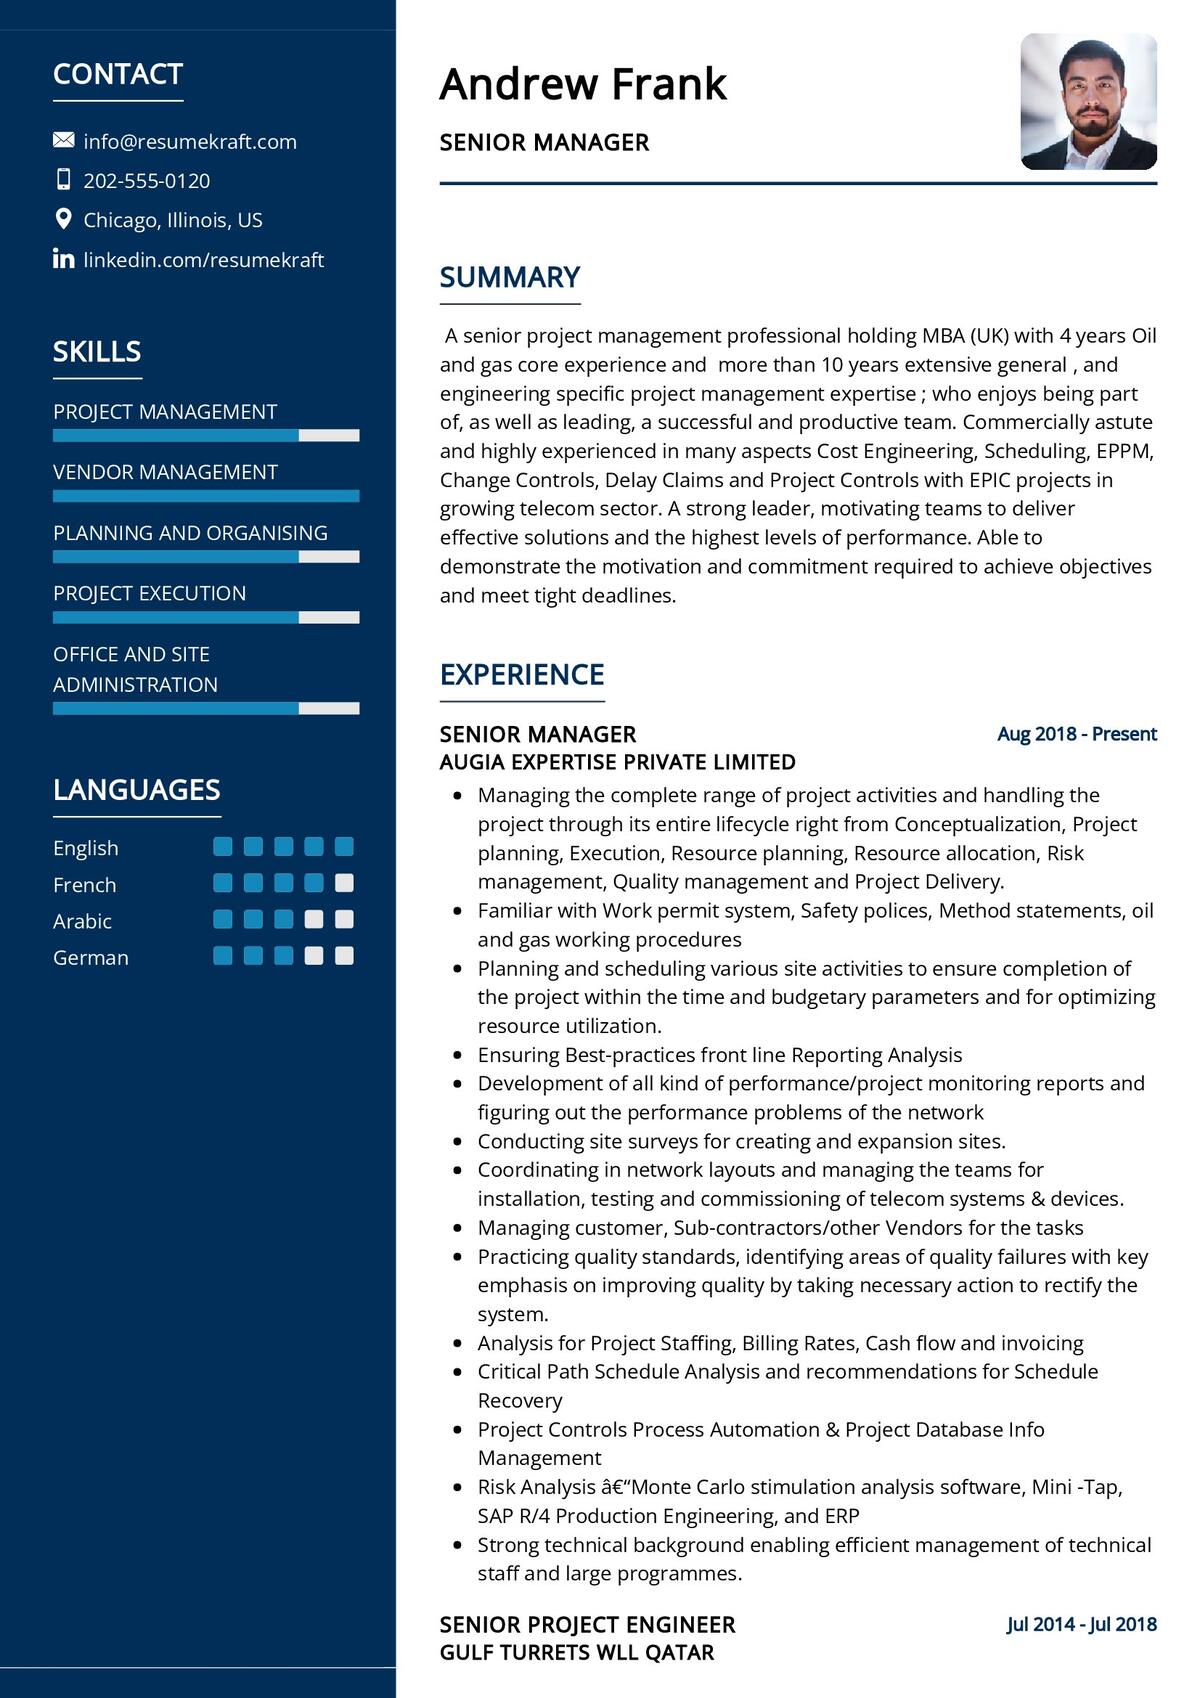 professional resume format for senior management position